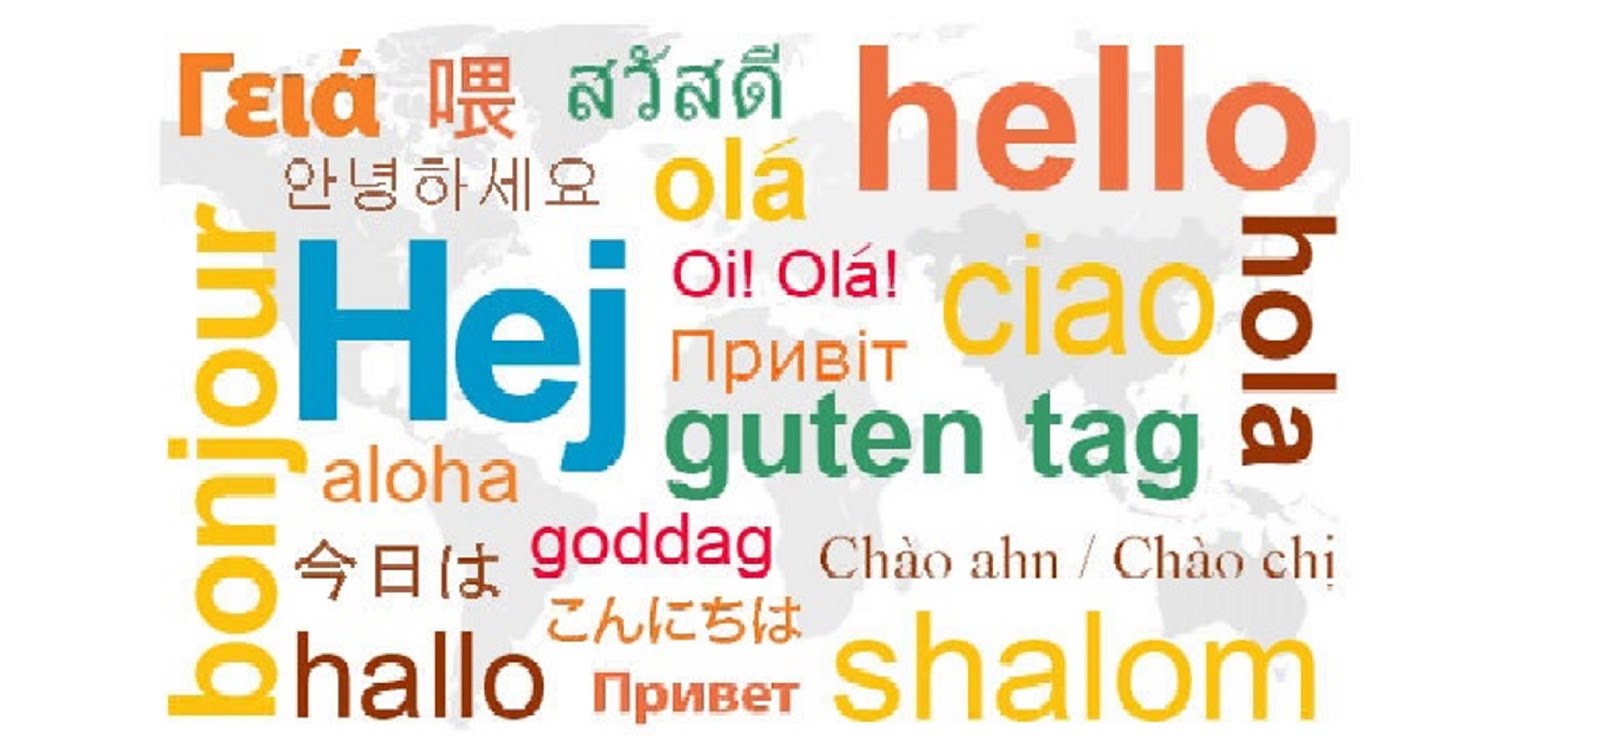 wat is de oudste taal